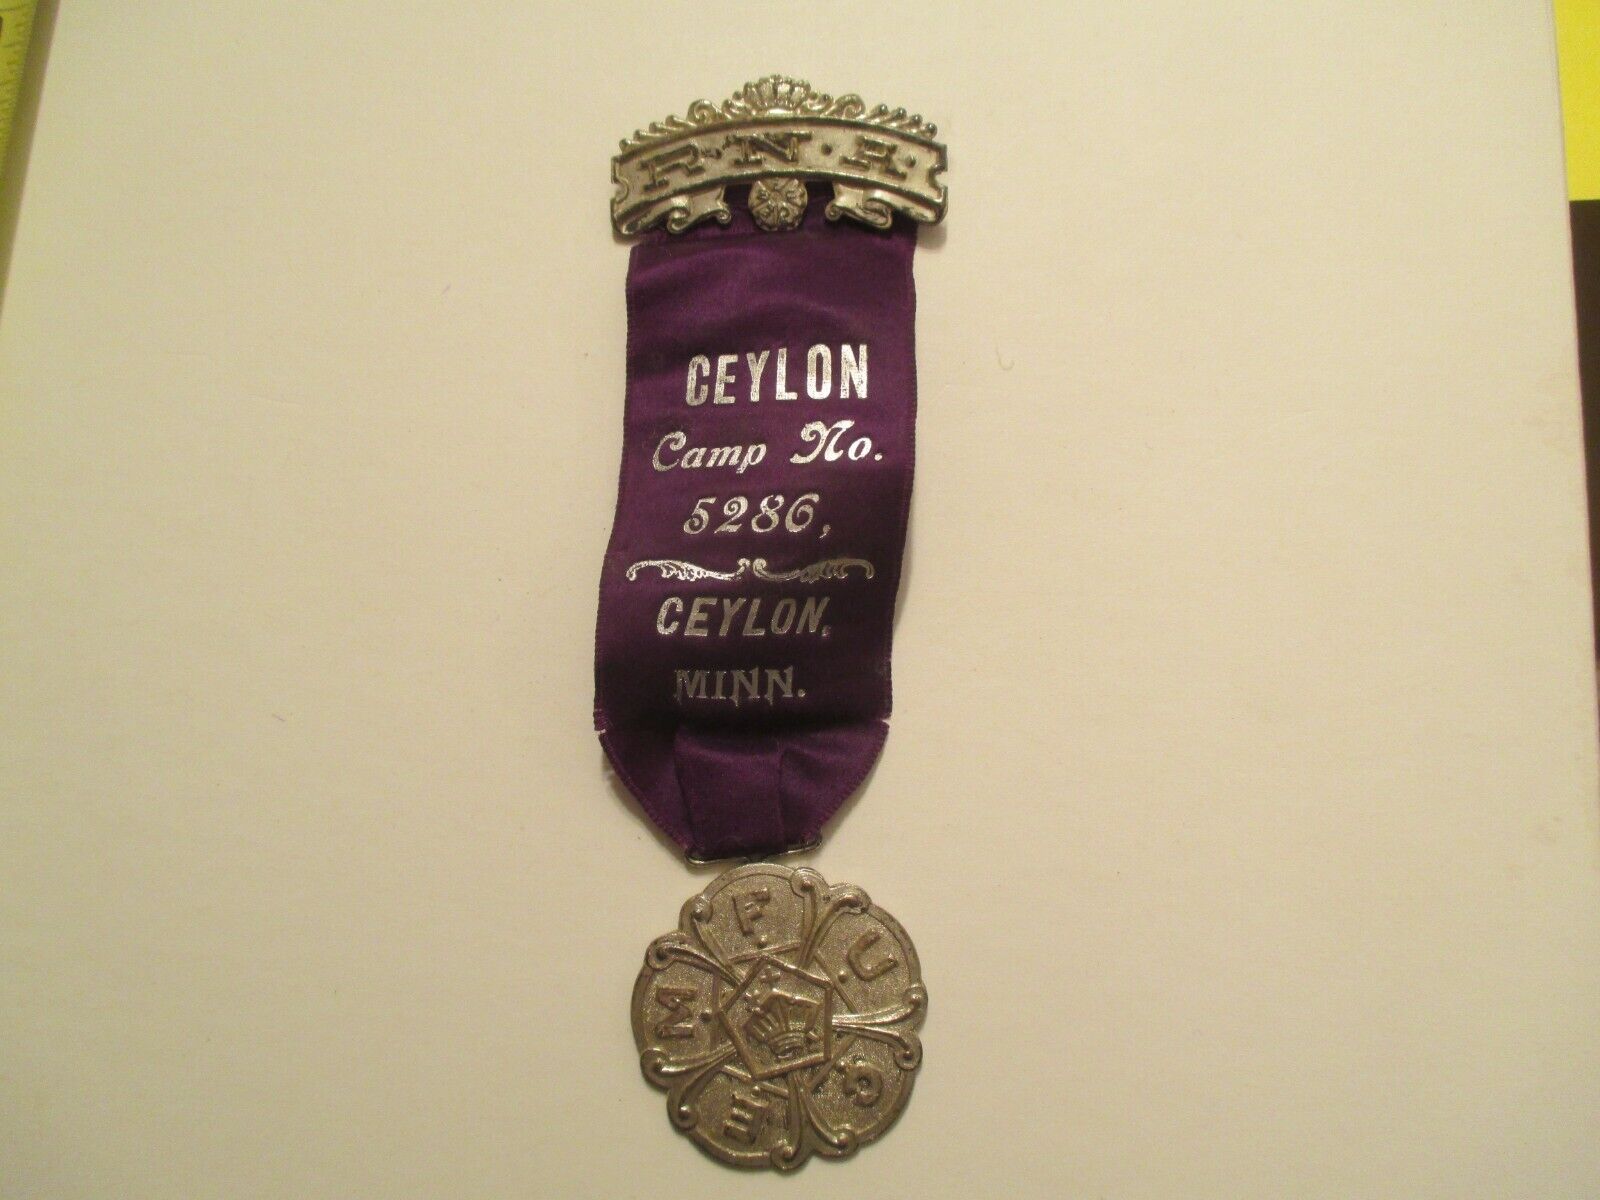 Ceylon Minnesota MN Camp No 5286 RNA MFUCE Badge ribbon Medal